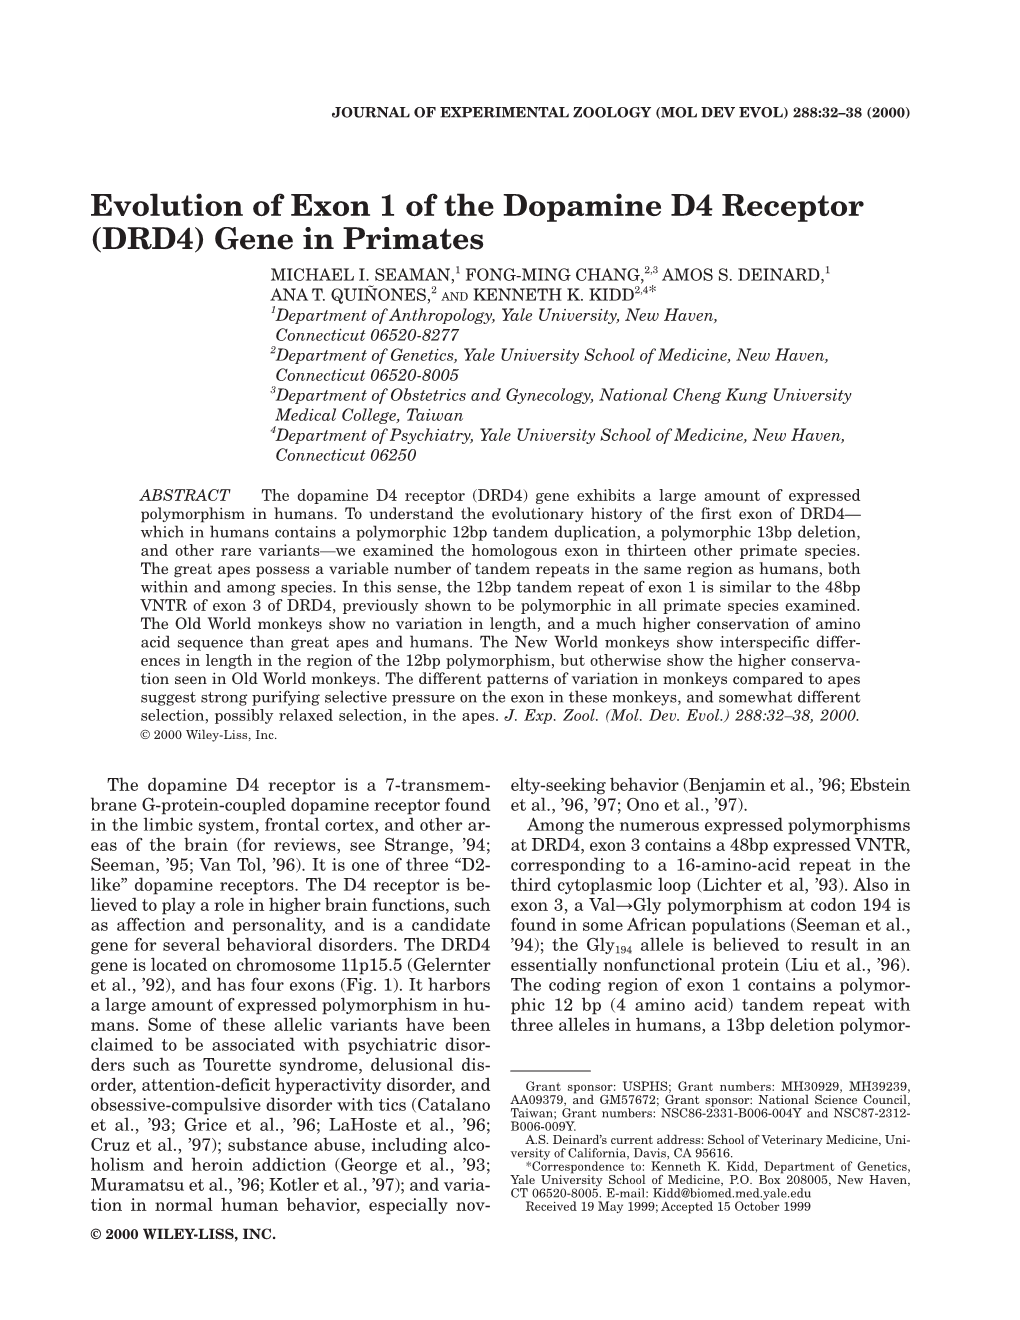 Evolution of Exon 1 of the Dopamine D4 Receptor (DRD4) Gene in Primates MICHAEL I